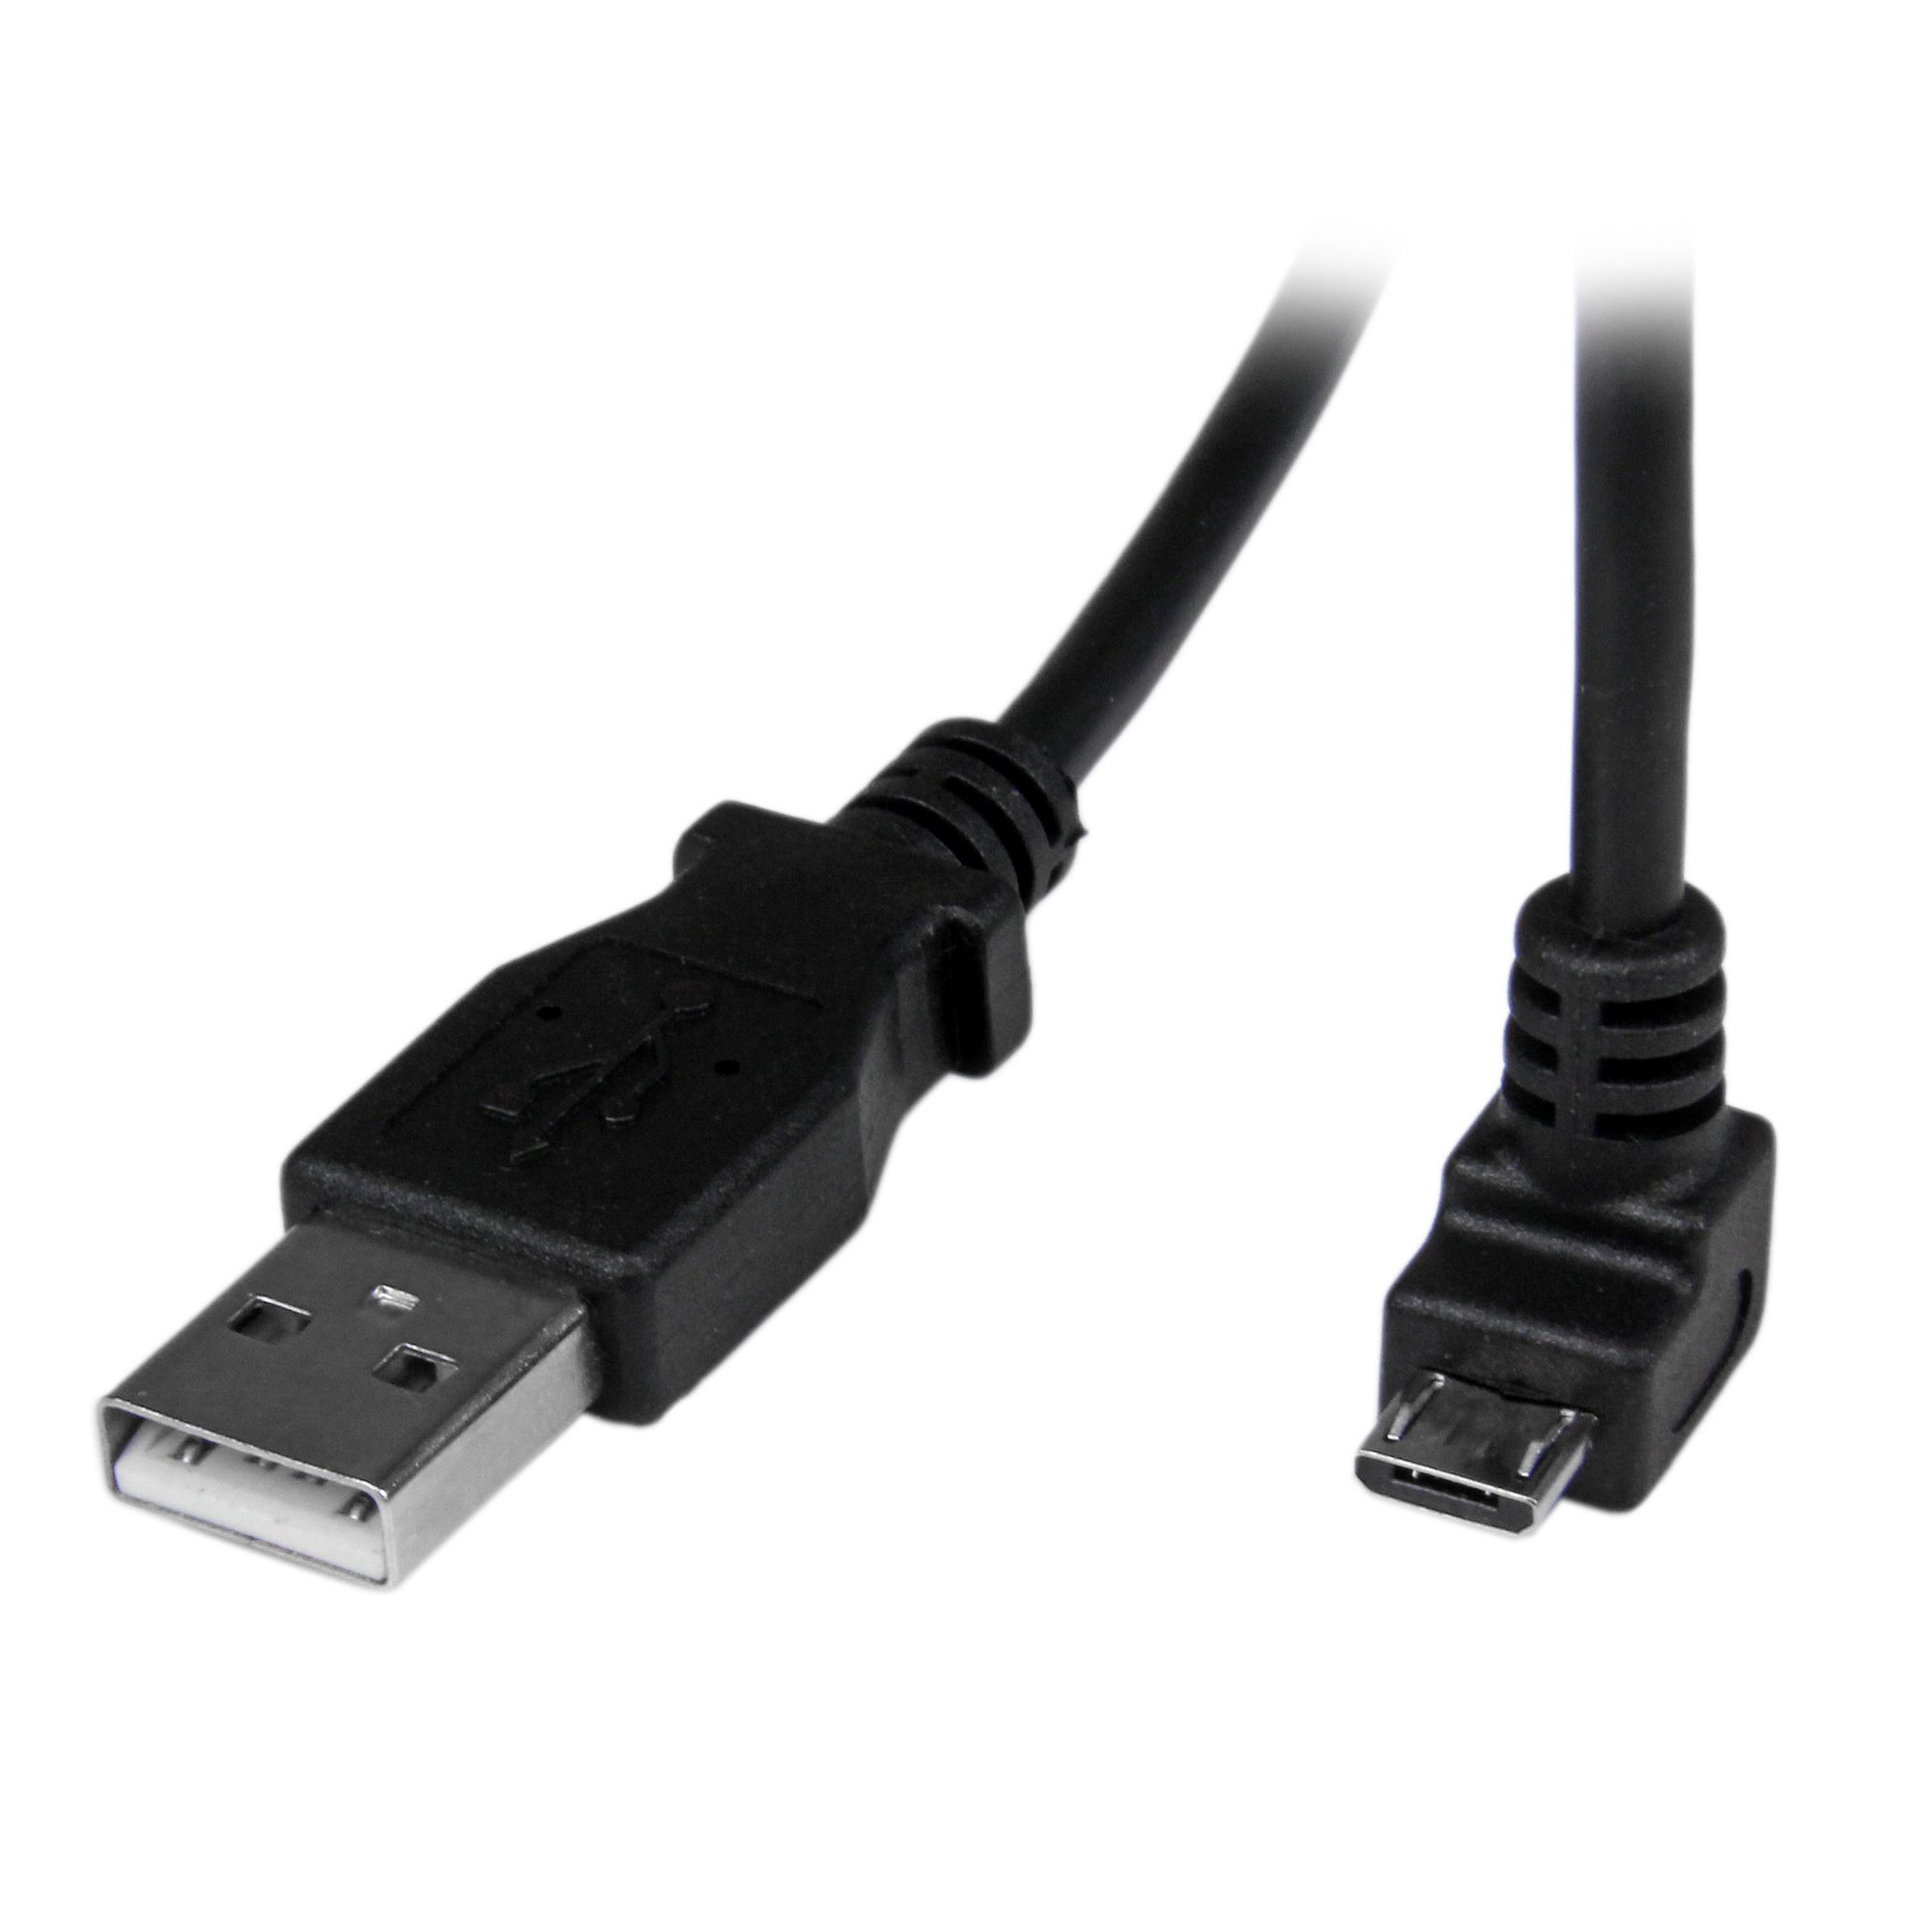 【USBAUB2MD】2M ANGLED MICRO USB CABLE - DOWN